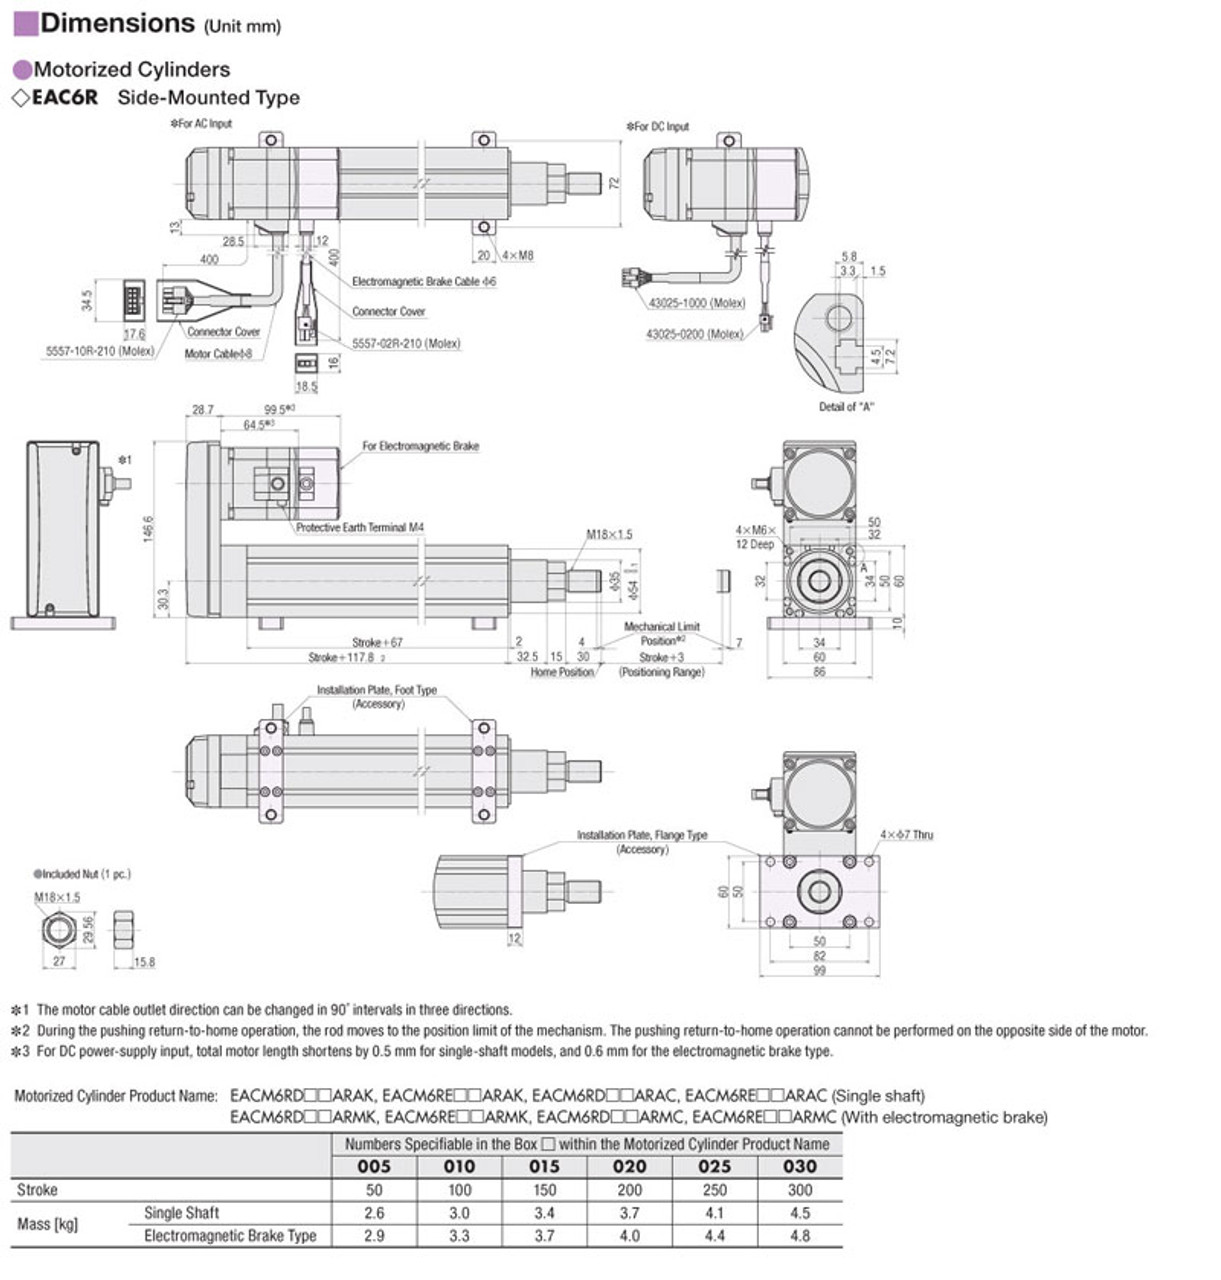 EAC6R-D20-ARMS - Dimensions